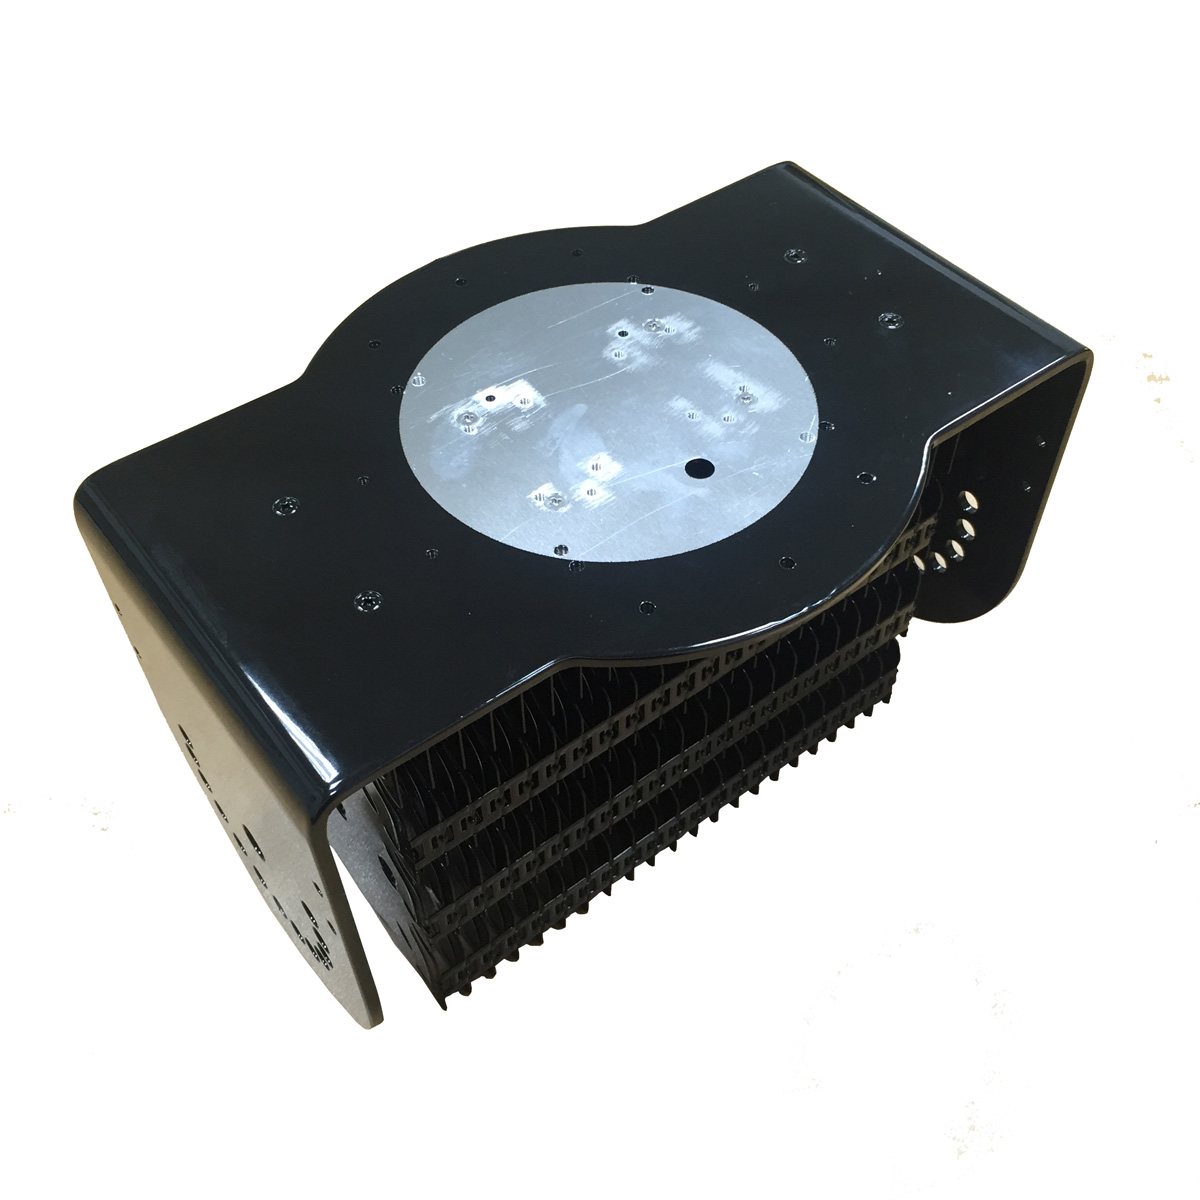 RSP-BF 100W 投射/天井燈 散熱體套件